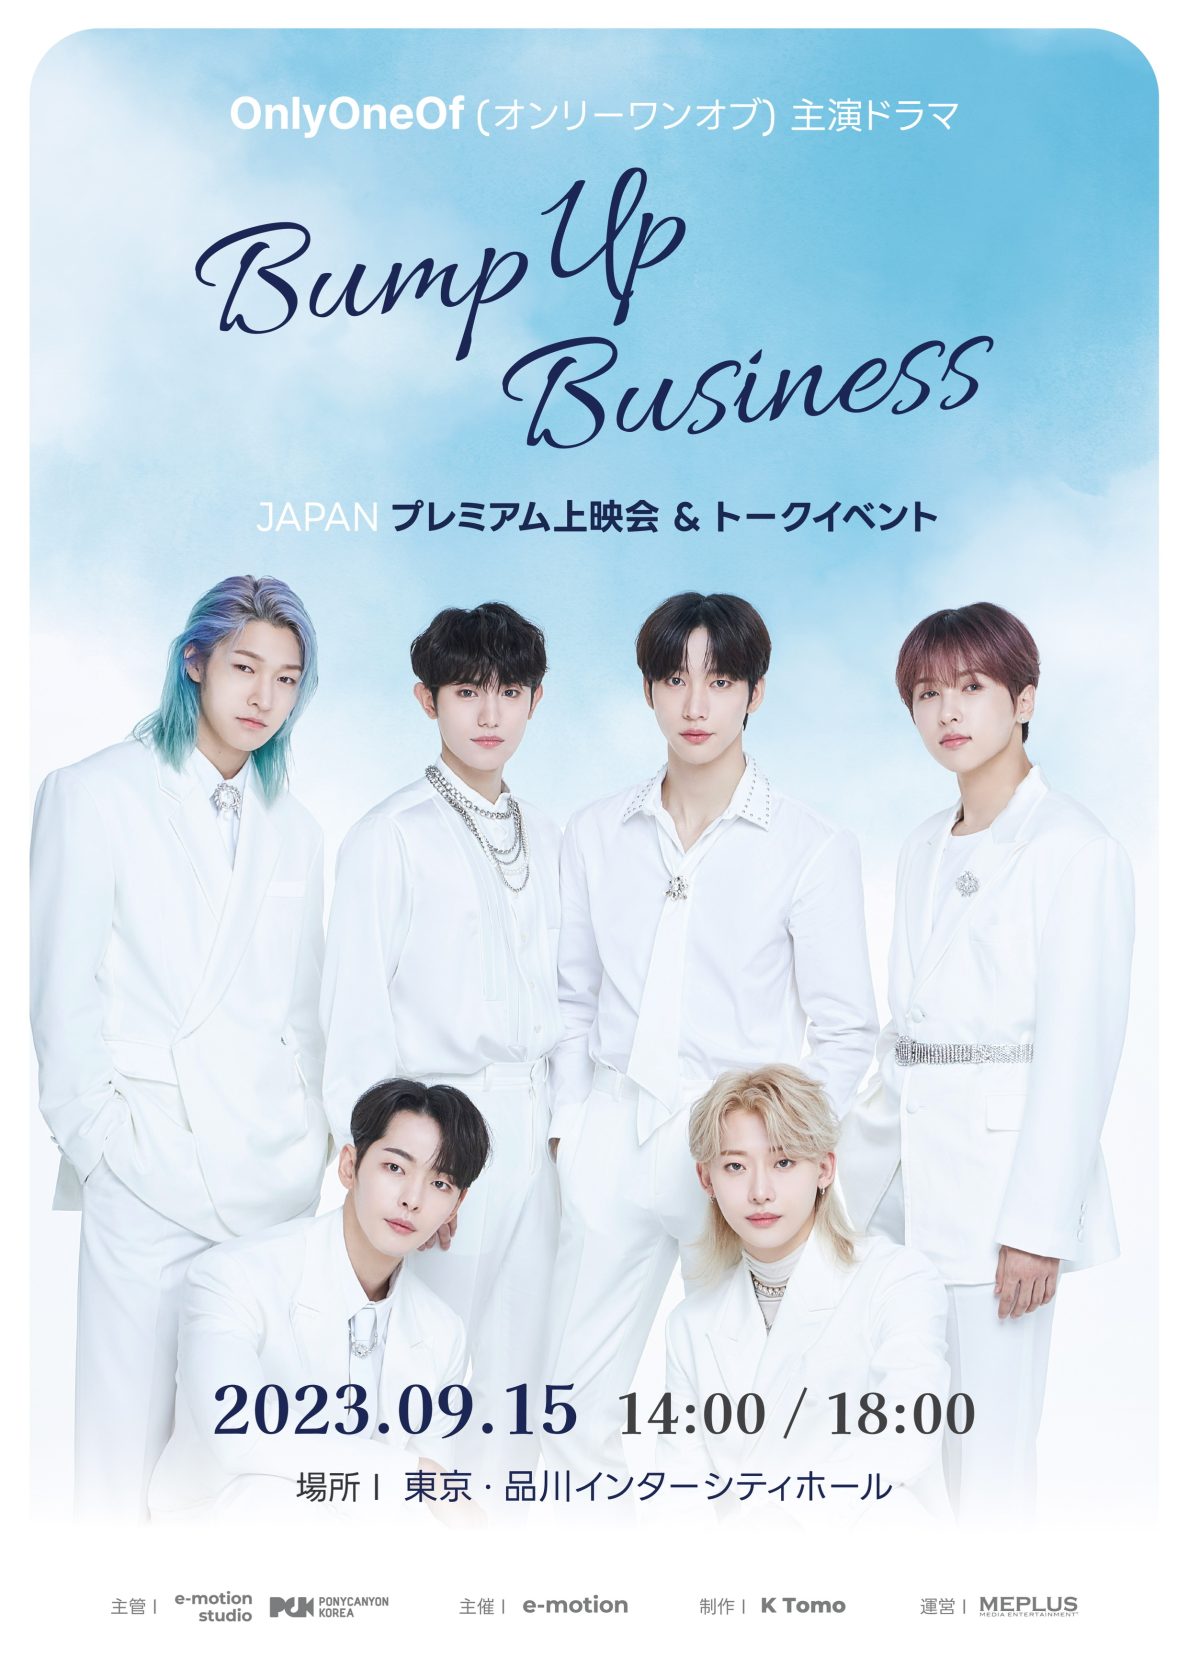 OnlyOneOf 全メンバー出演のドラマ「Bump Up Business」ジャパンプレミアム上映会&トークイベント開催決定